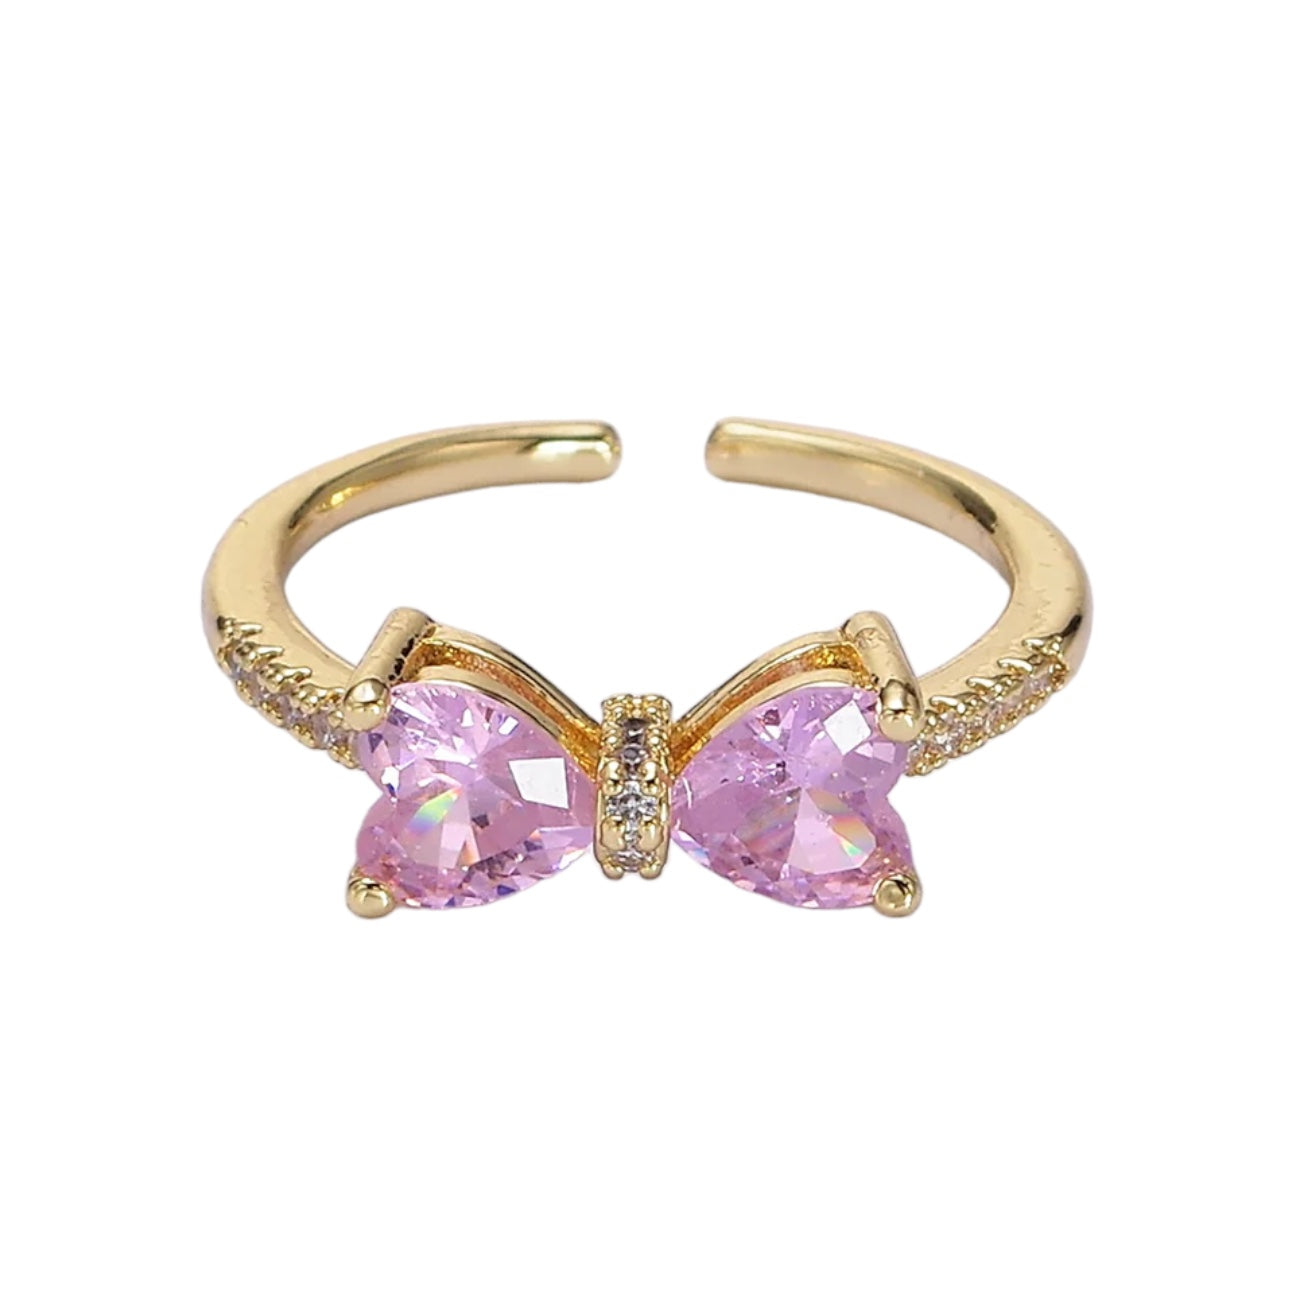 “Juliette” 14k gold filled cubic zirconia bow adjustable ring